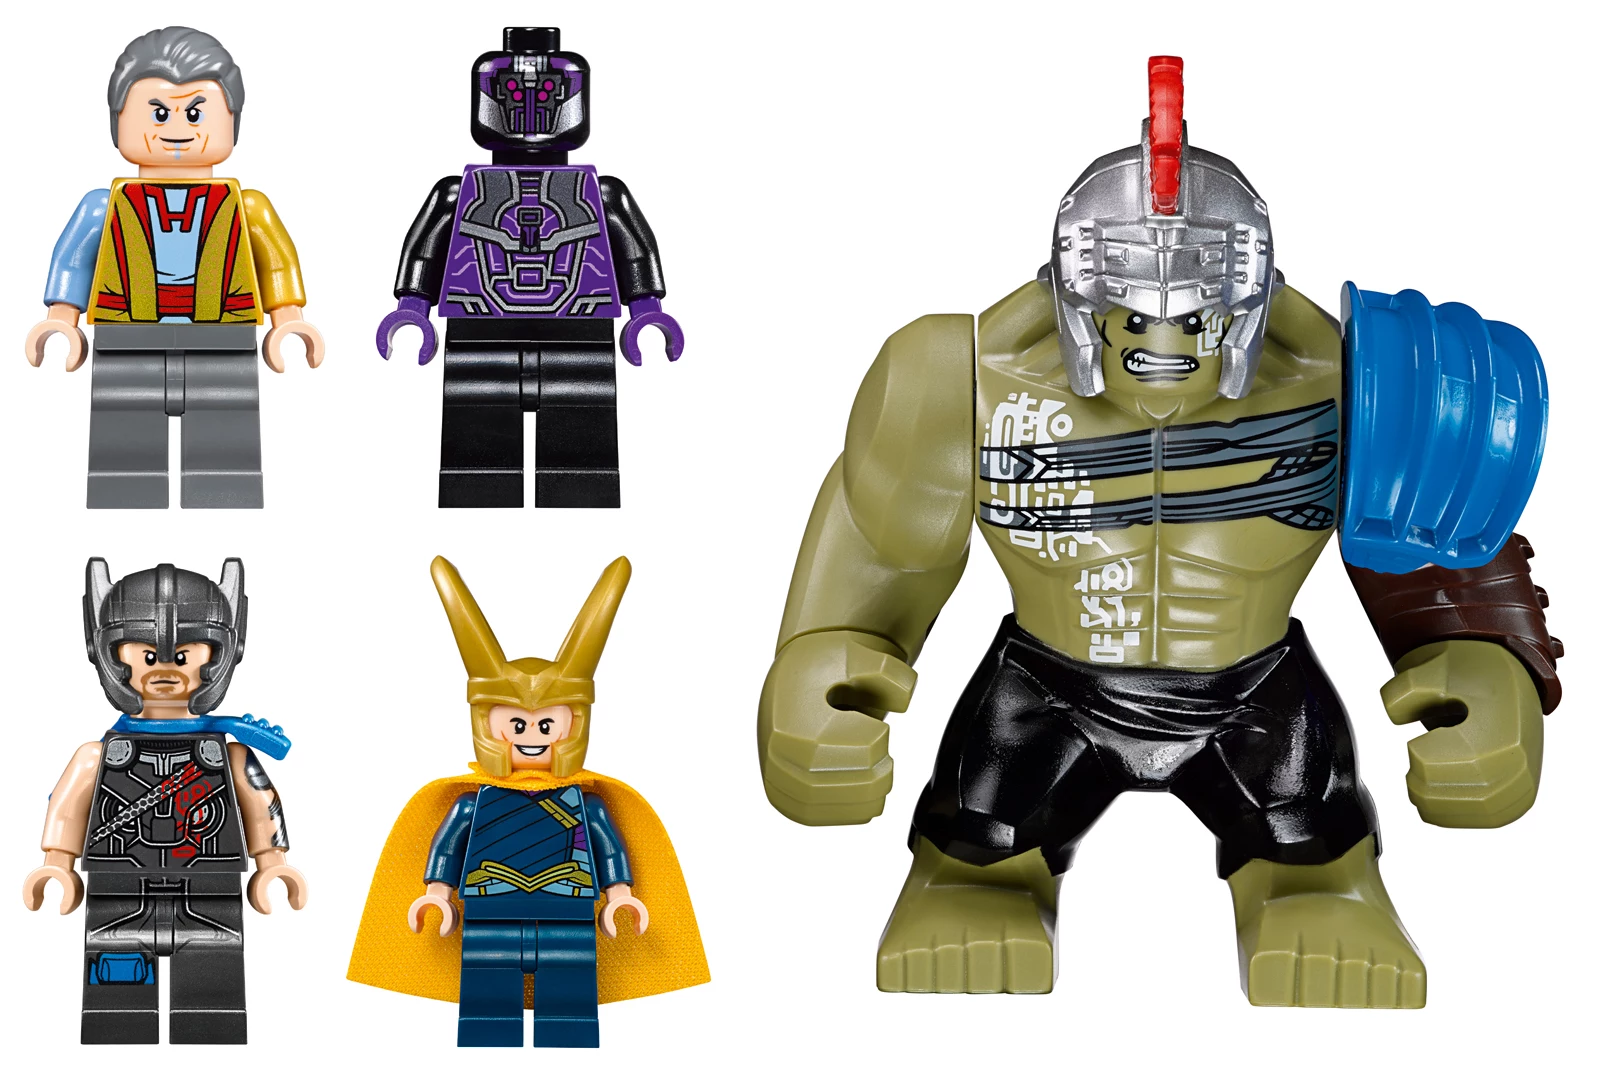 Warrior Hulk and Lego Jeff Goldblum Join New 'Thor: Ragnarok Sets'